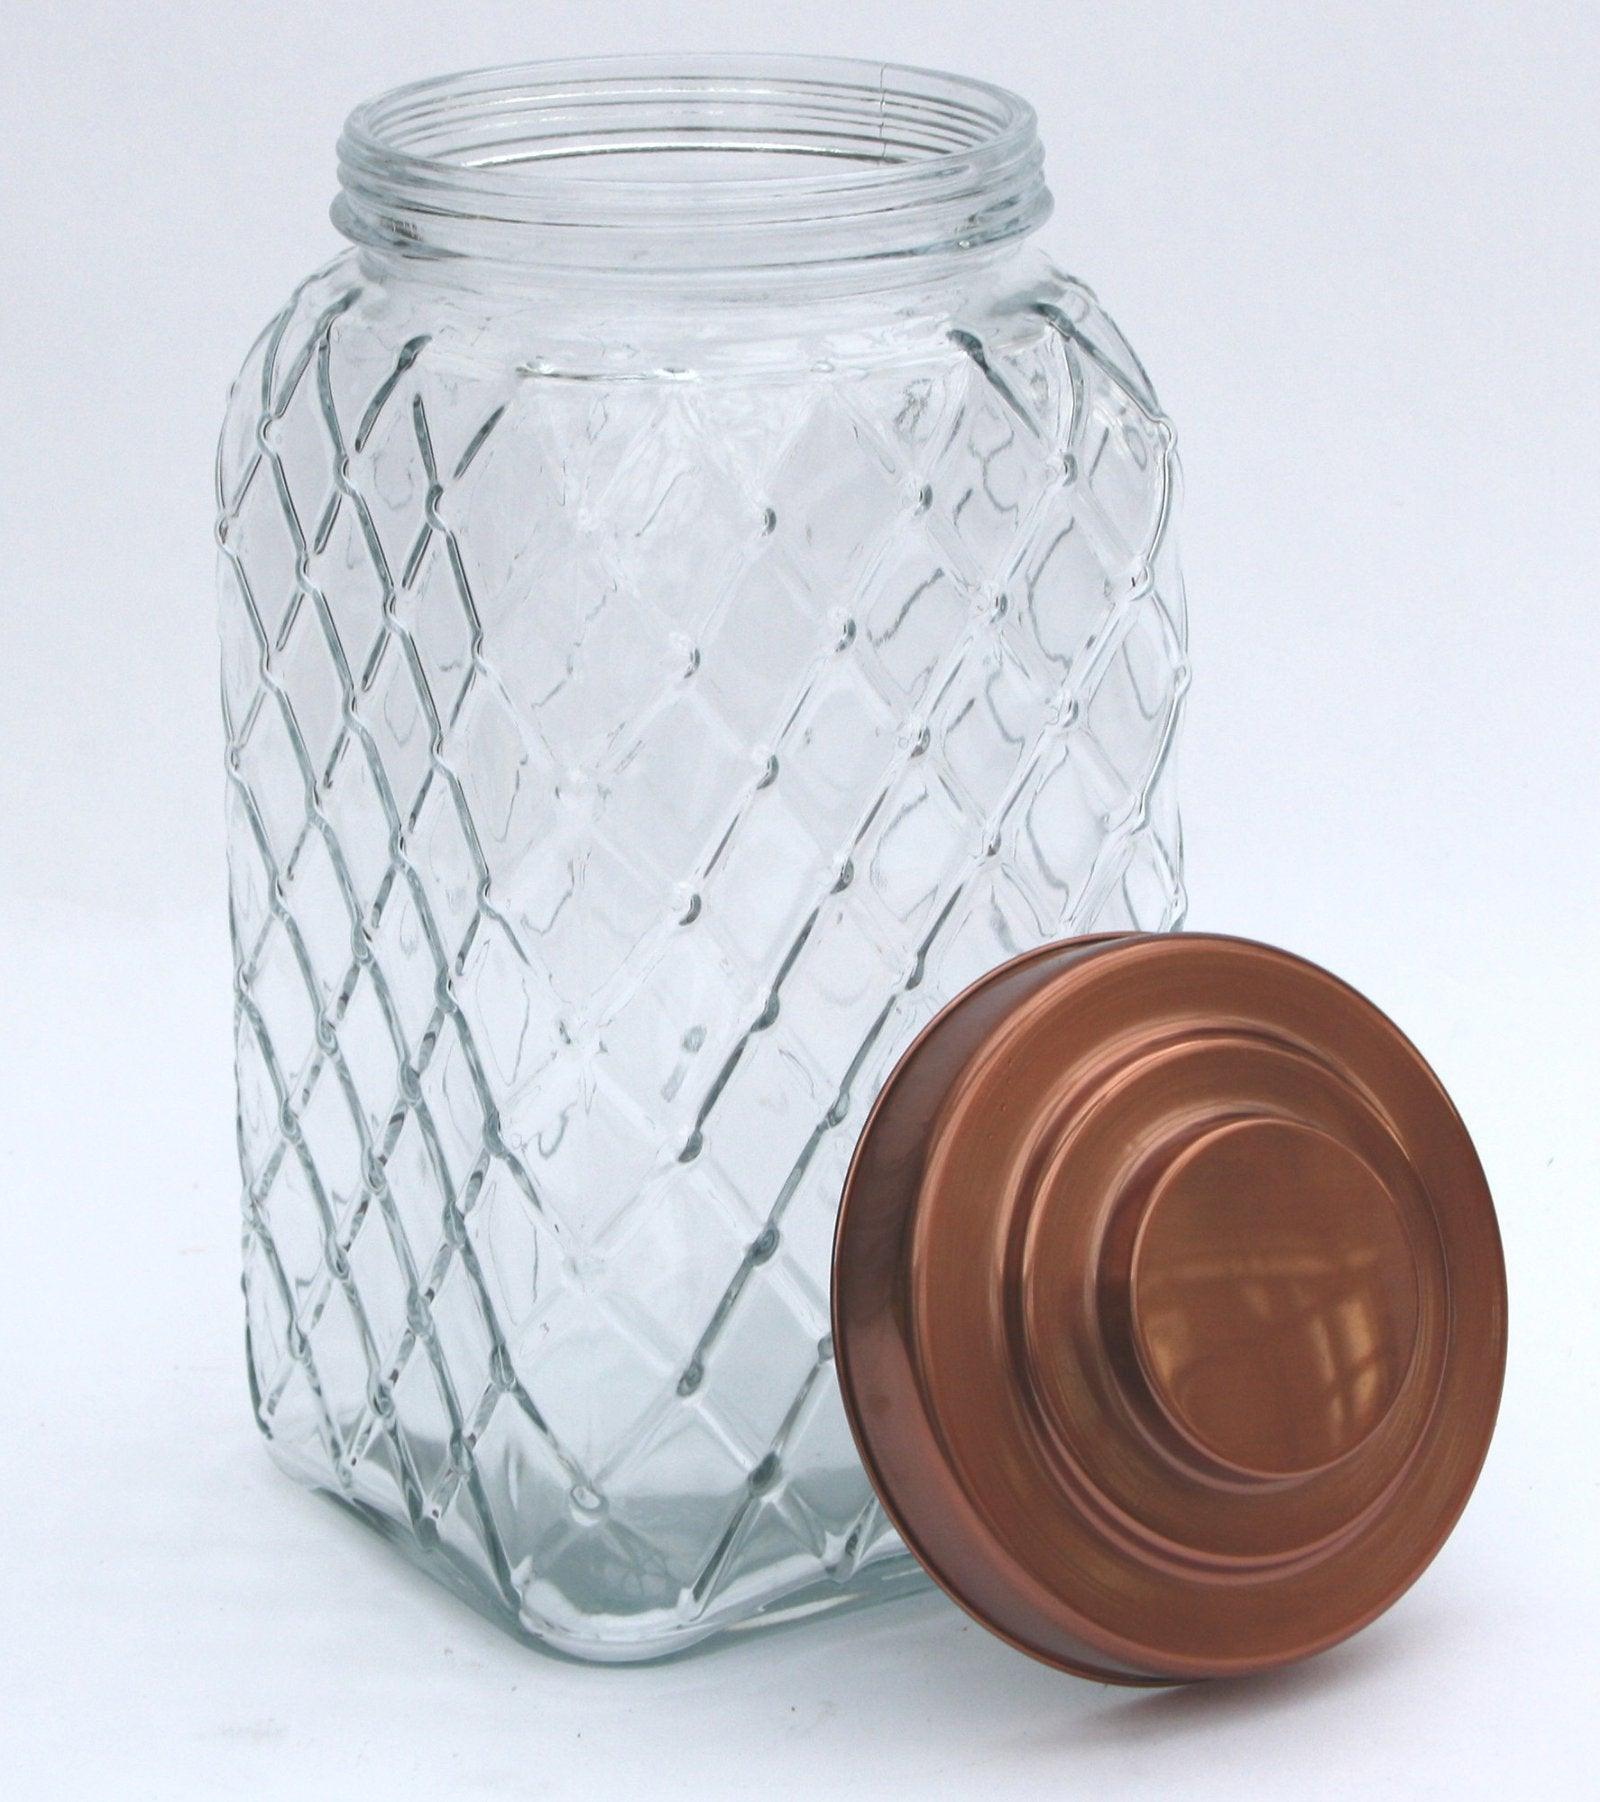 Copper Lidded Square Glass Jar - 12 Inch Large - £26.99 - Kitchen Storage 